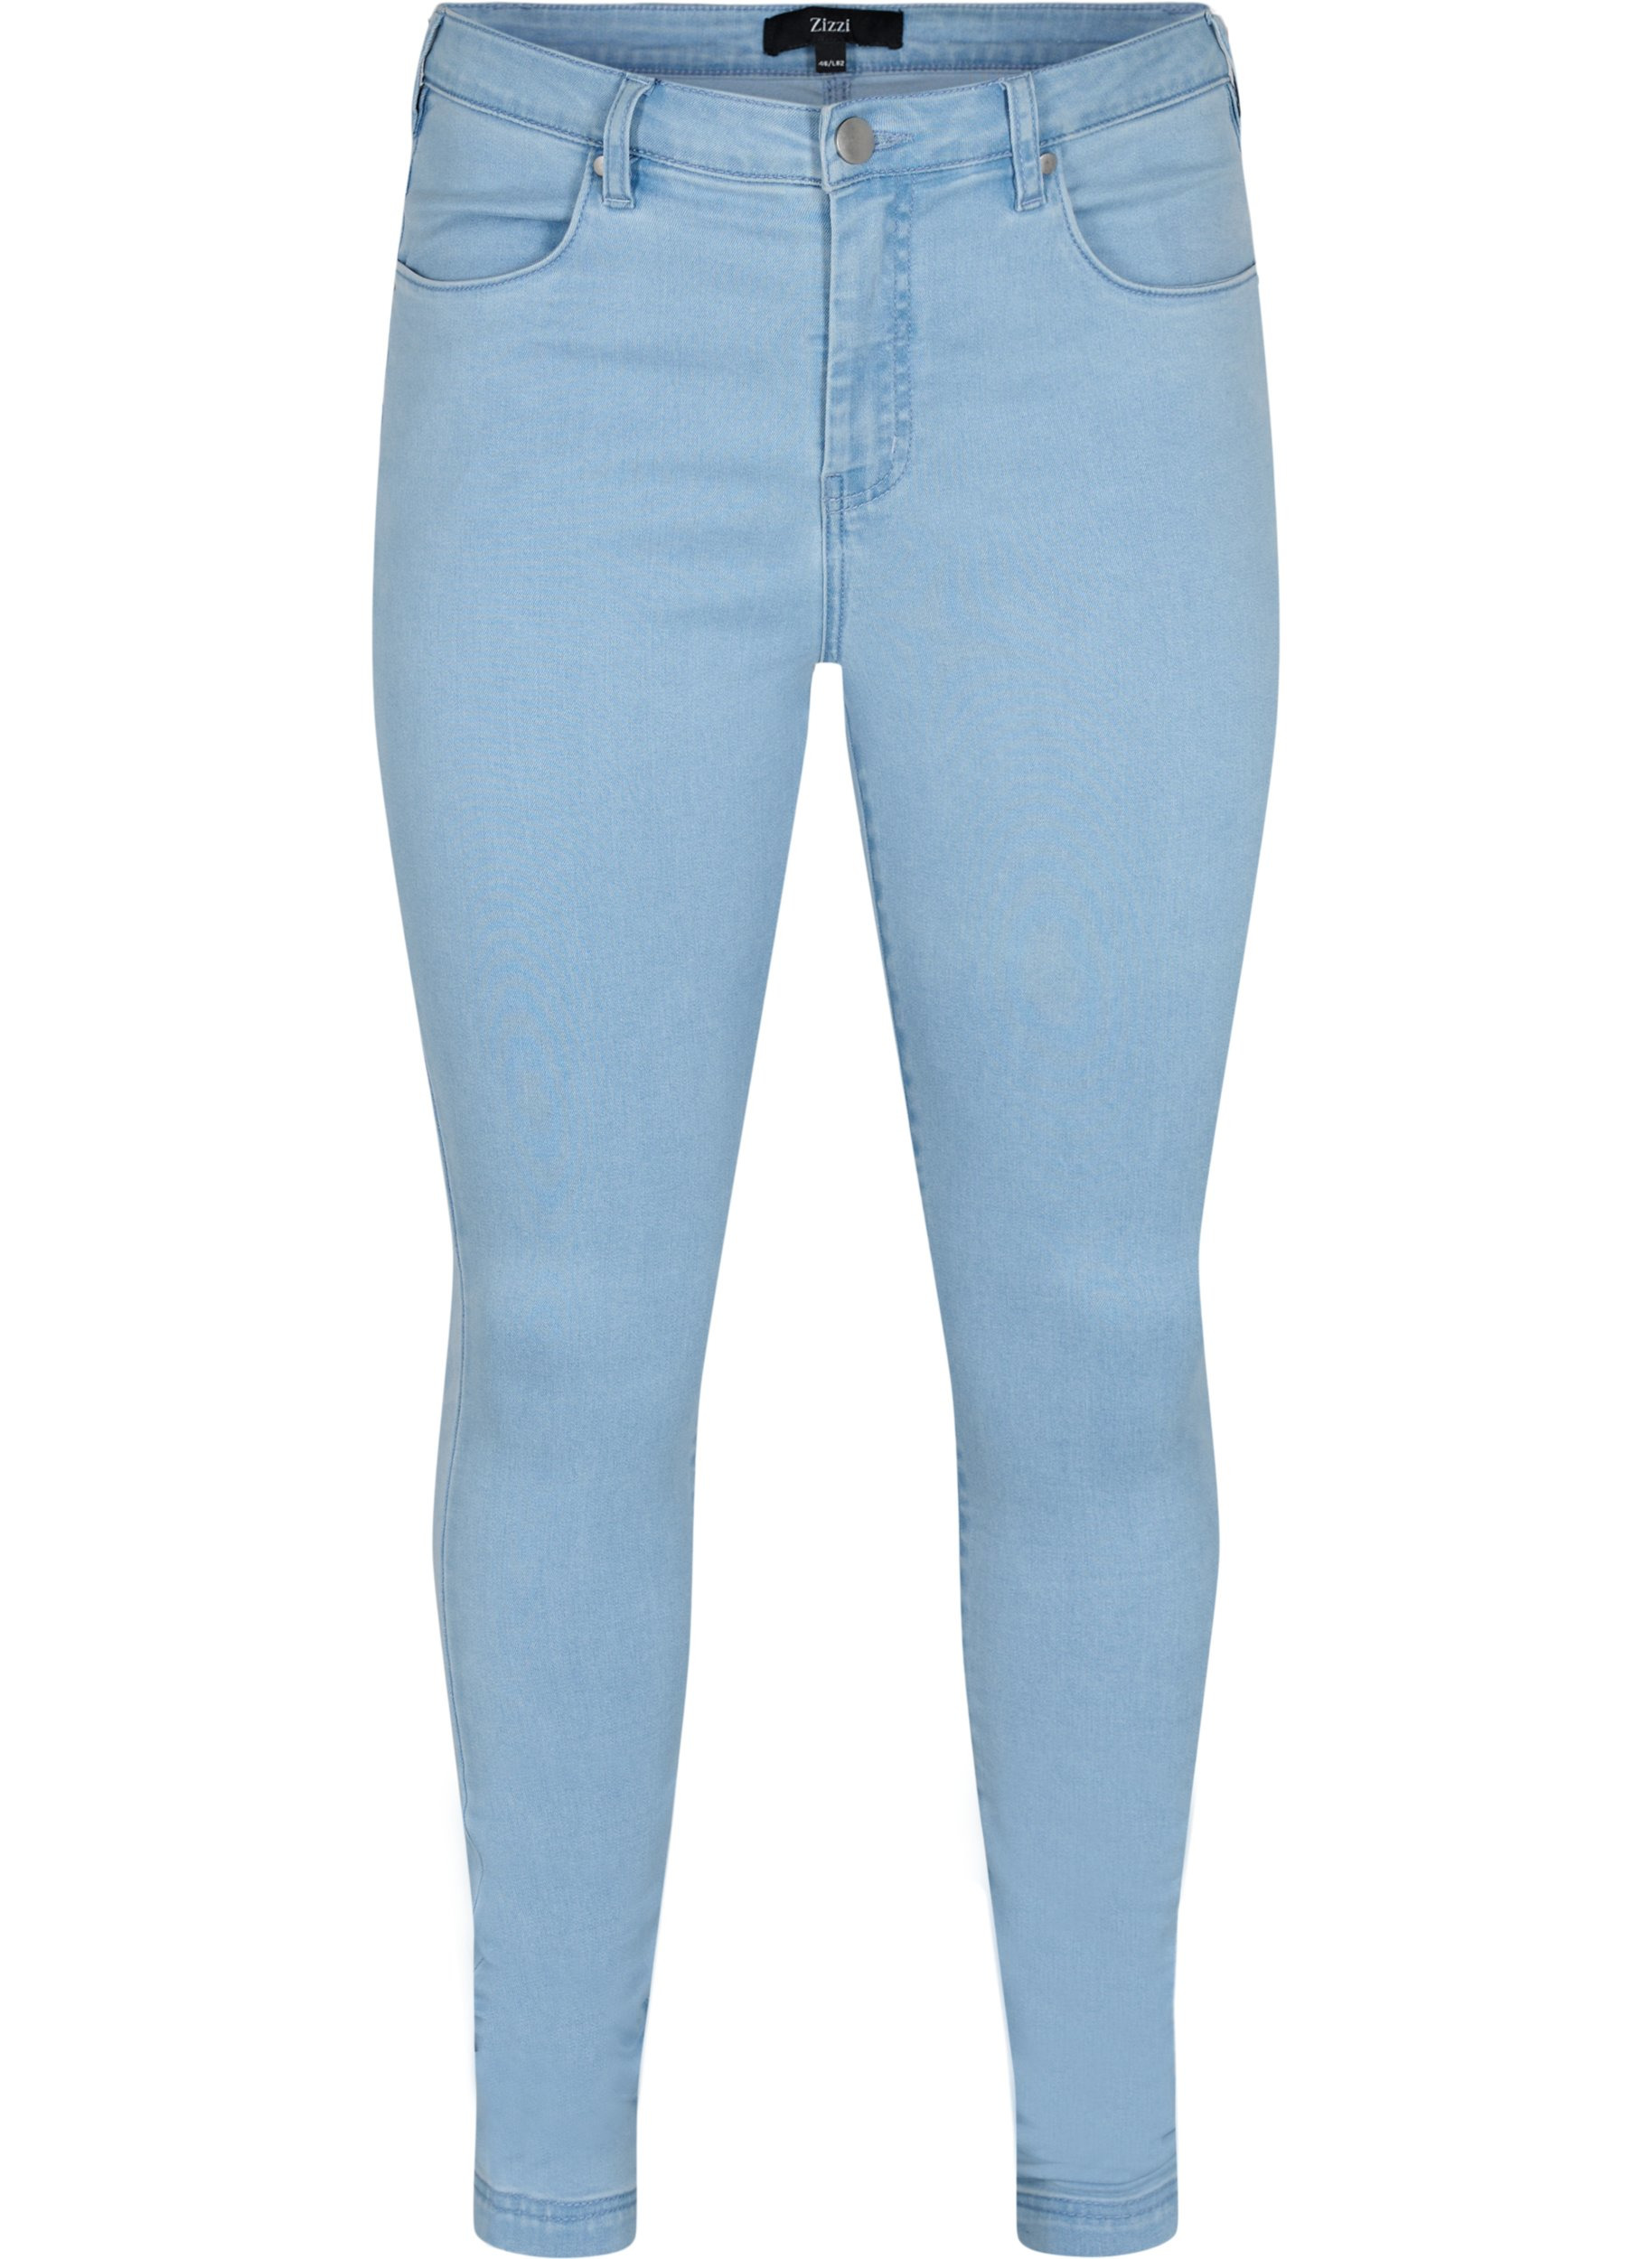 Super Slim Amy Jeans mit hoher Taille, Ex Lt Blue